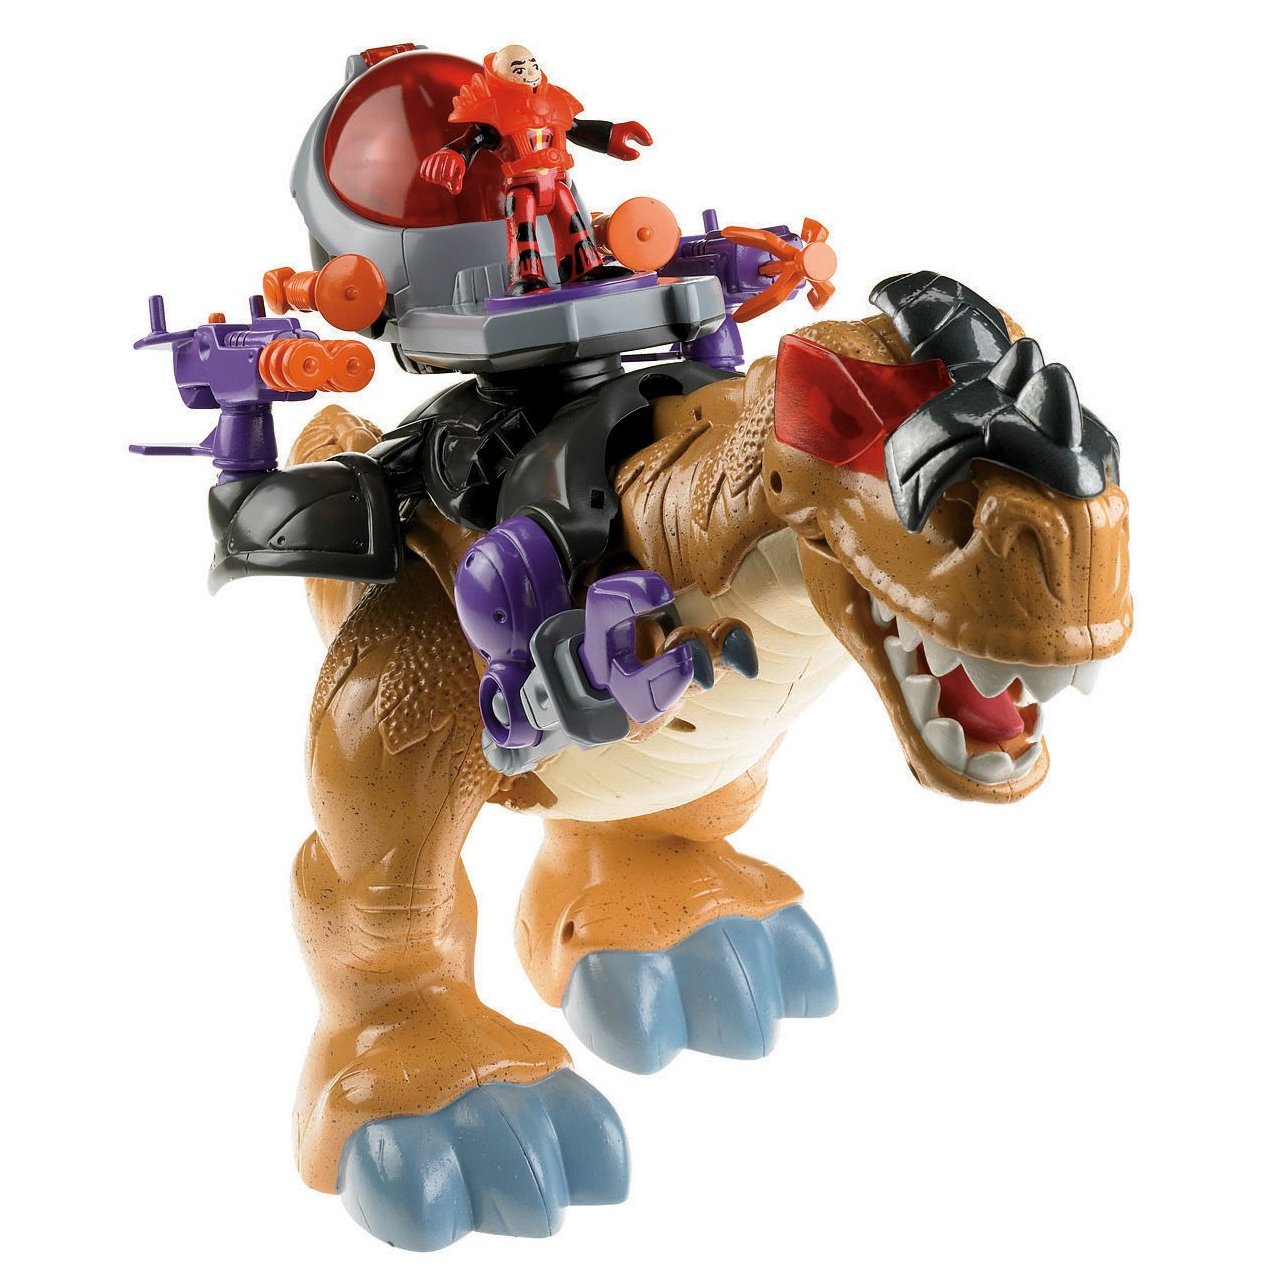 Imaginex Dinosaur Toys 10